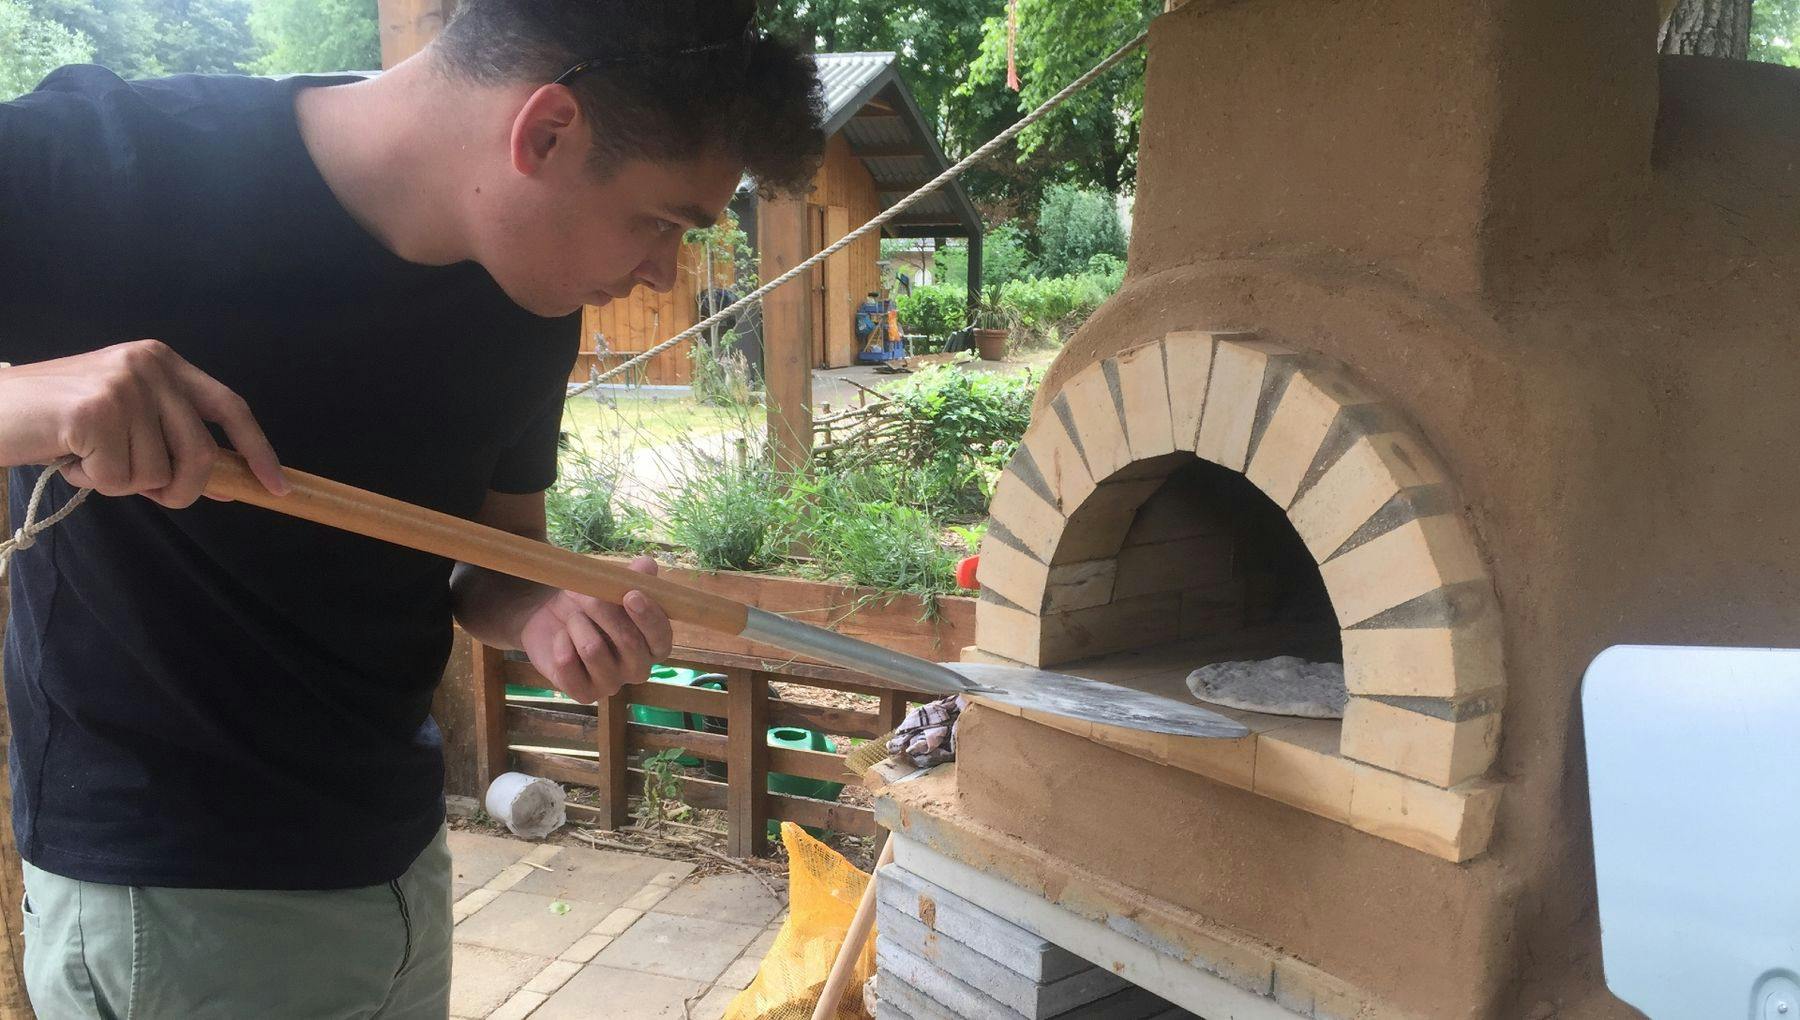 Stadsboerderij Osdorp man baking pizza in oven